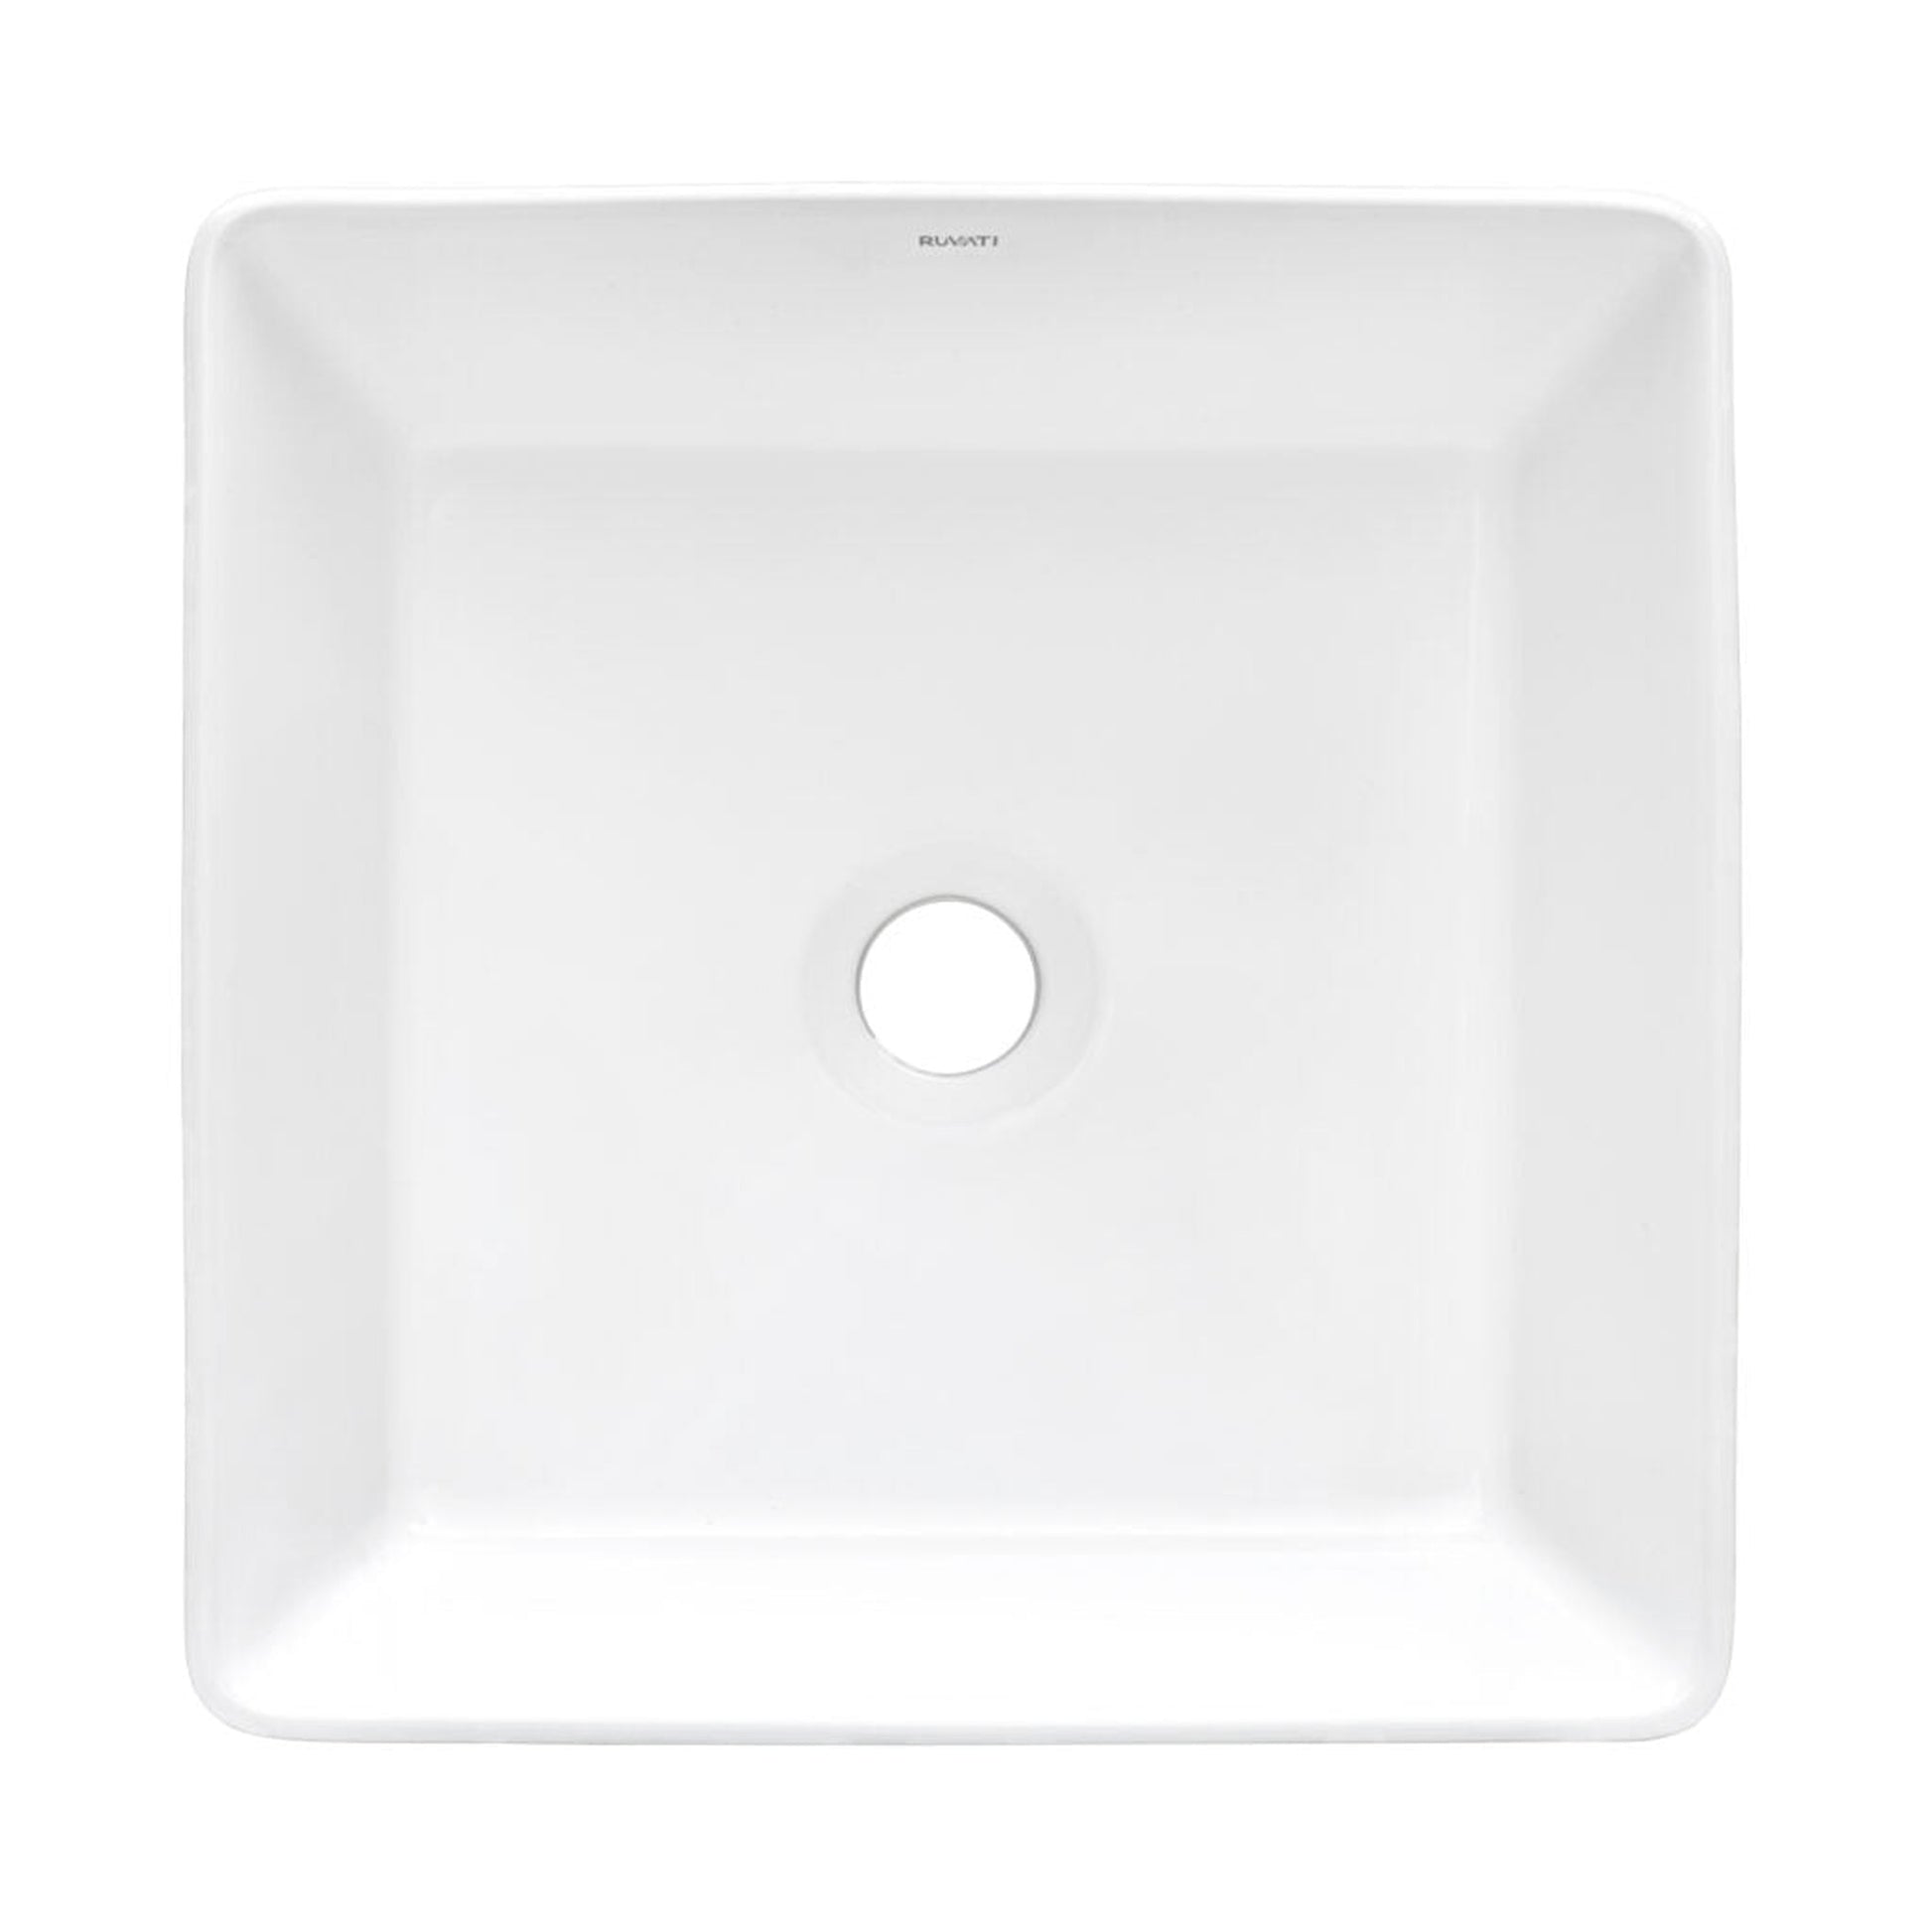 Ruvati Vista 15” x 15” Square White Above Counter Porcelain Ceramic Bathroom Vessel Sink